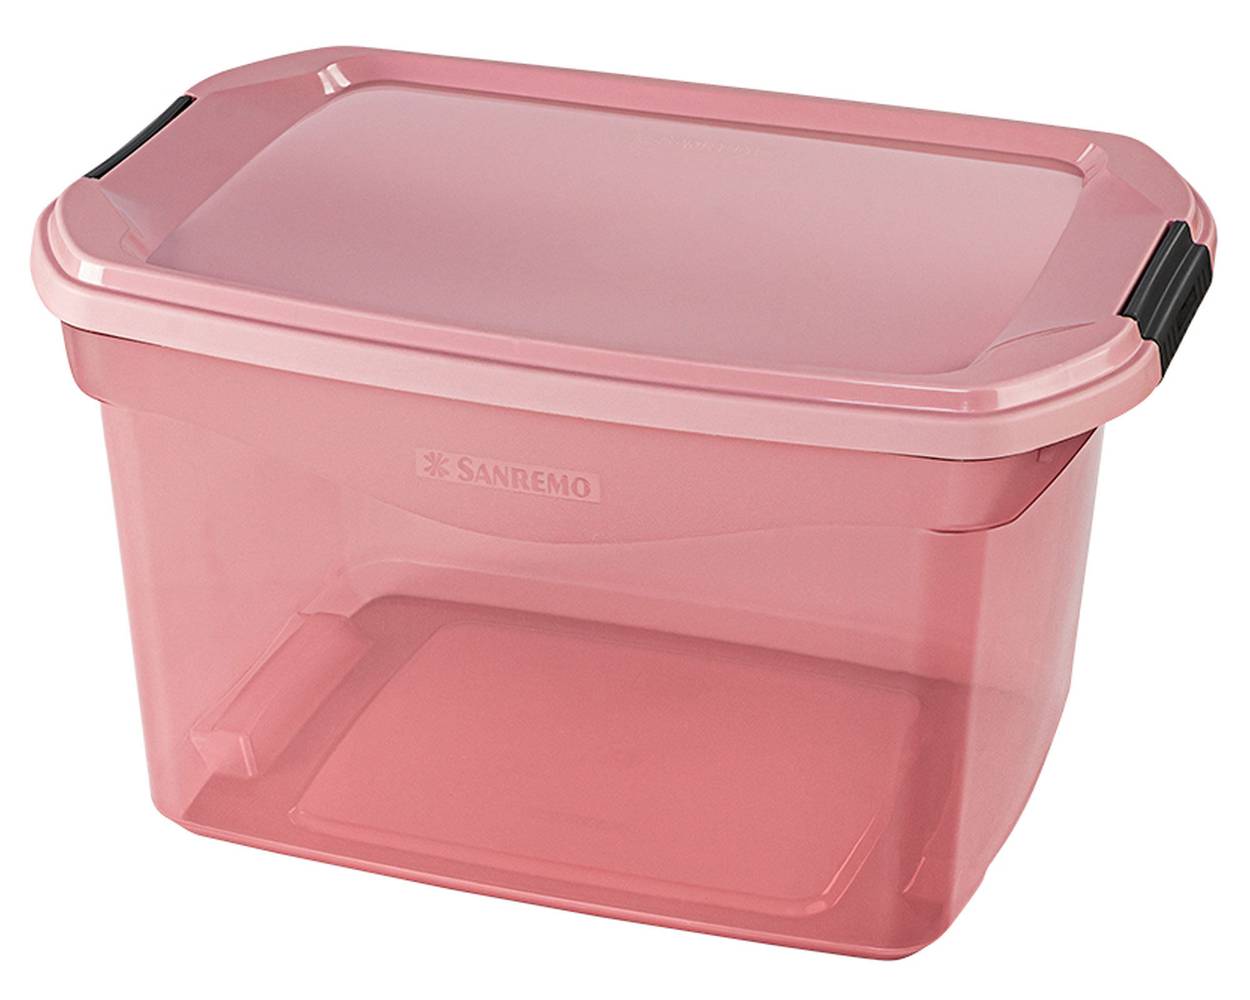 San remo caja organizadora plástico rosa (29 l)